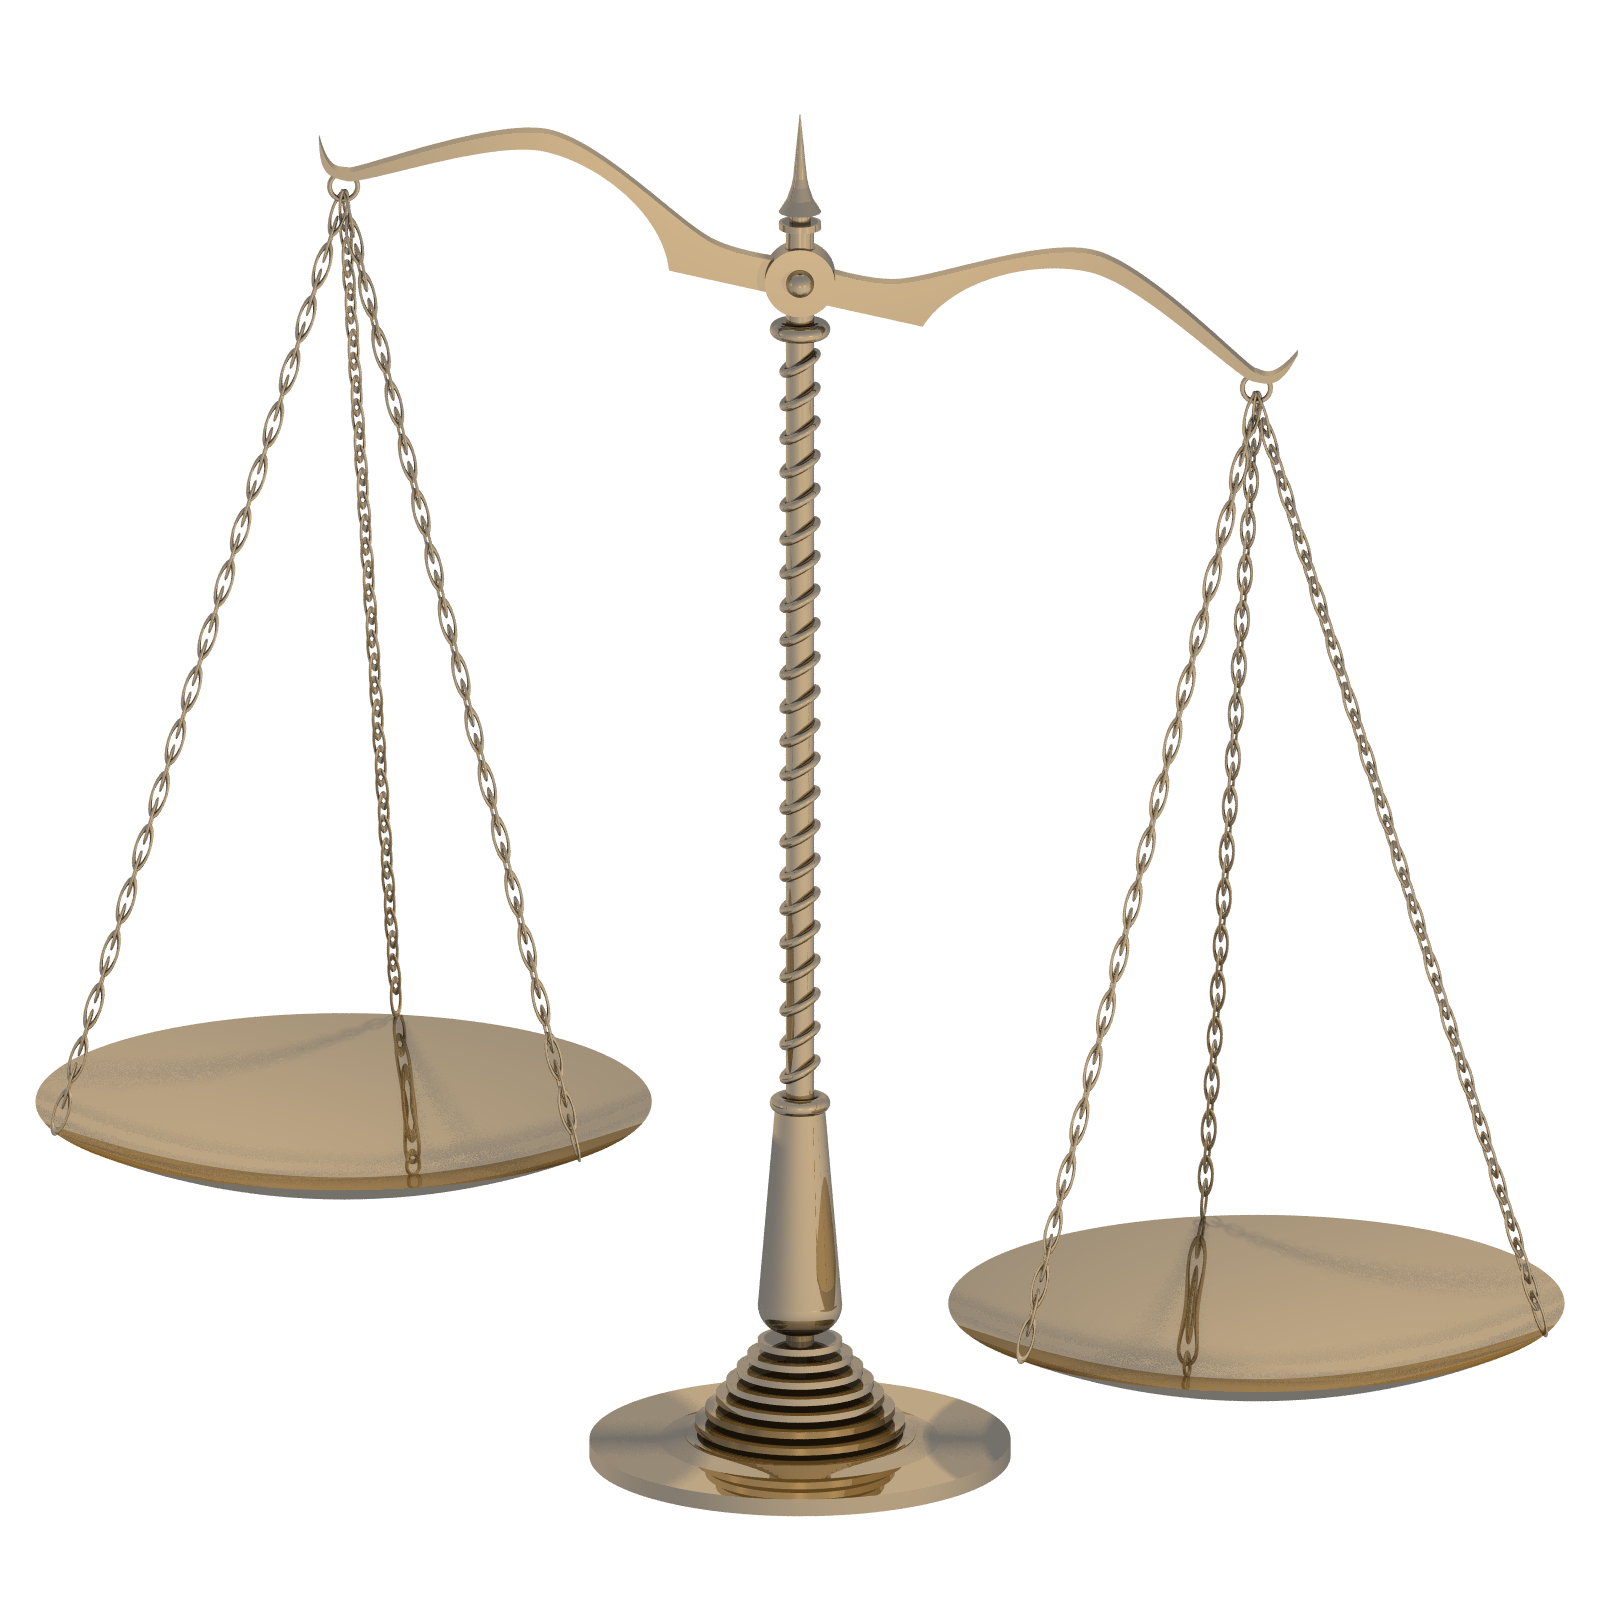 Weight Scale, Equal-Arm Balan